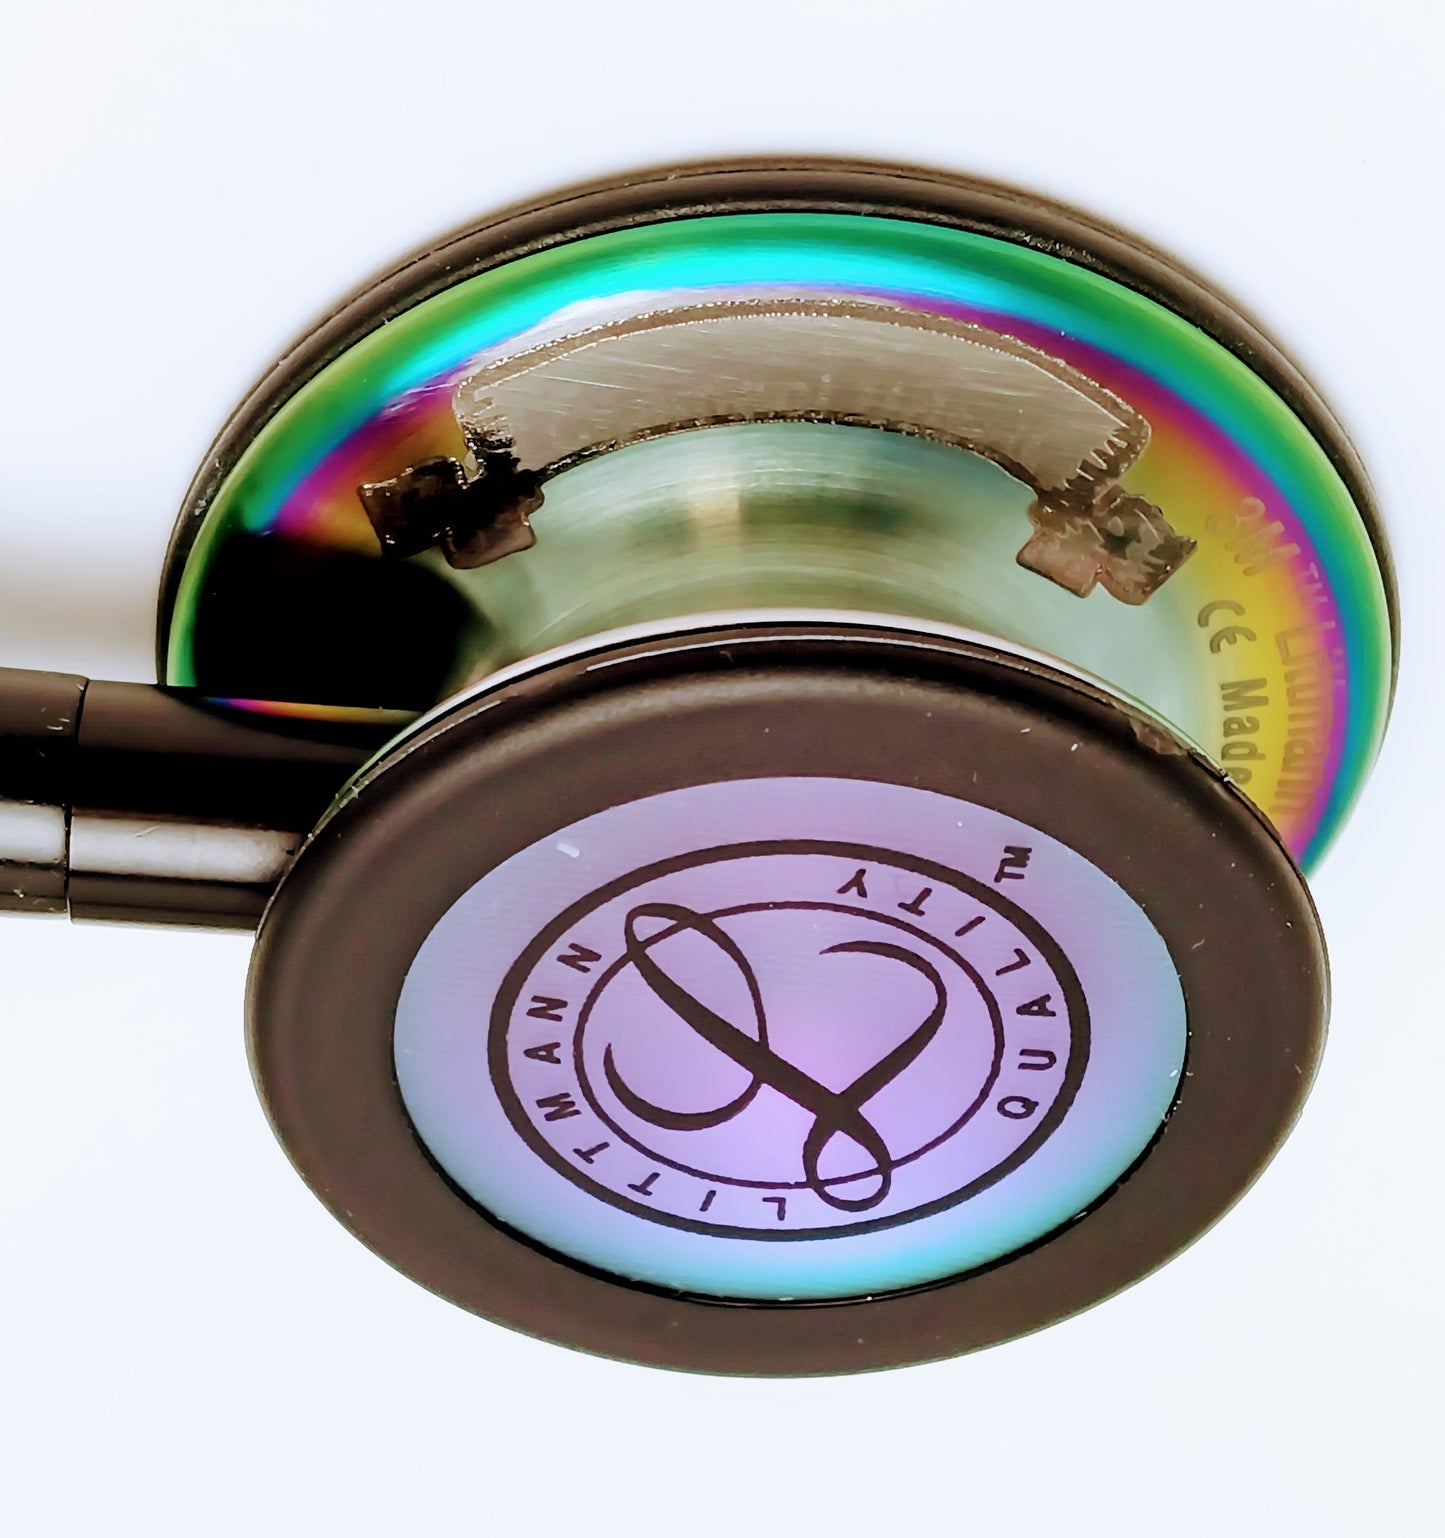 Littmann Classic III Monitoring Stethoscope: Black - Rainbow Finish 5870 - Over Engraved 3M Littmann Stethoscopes 3M Littmann   